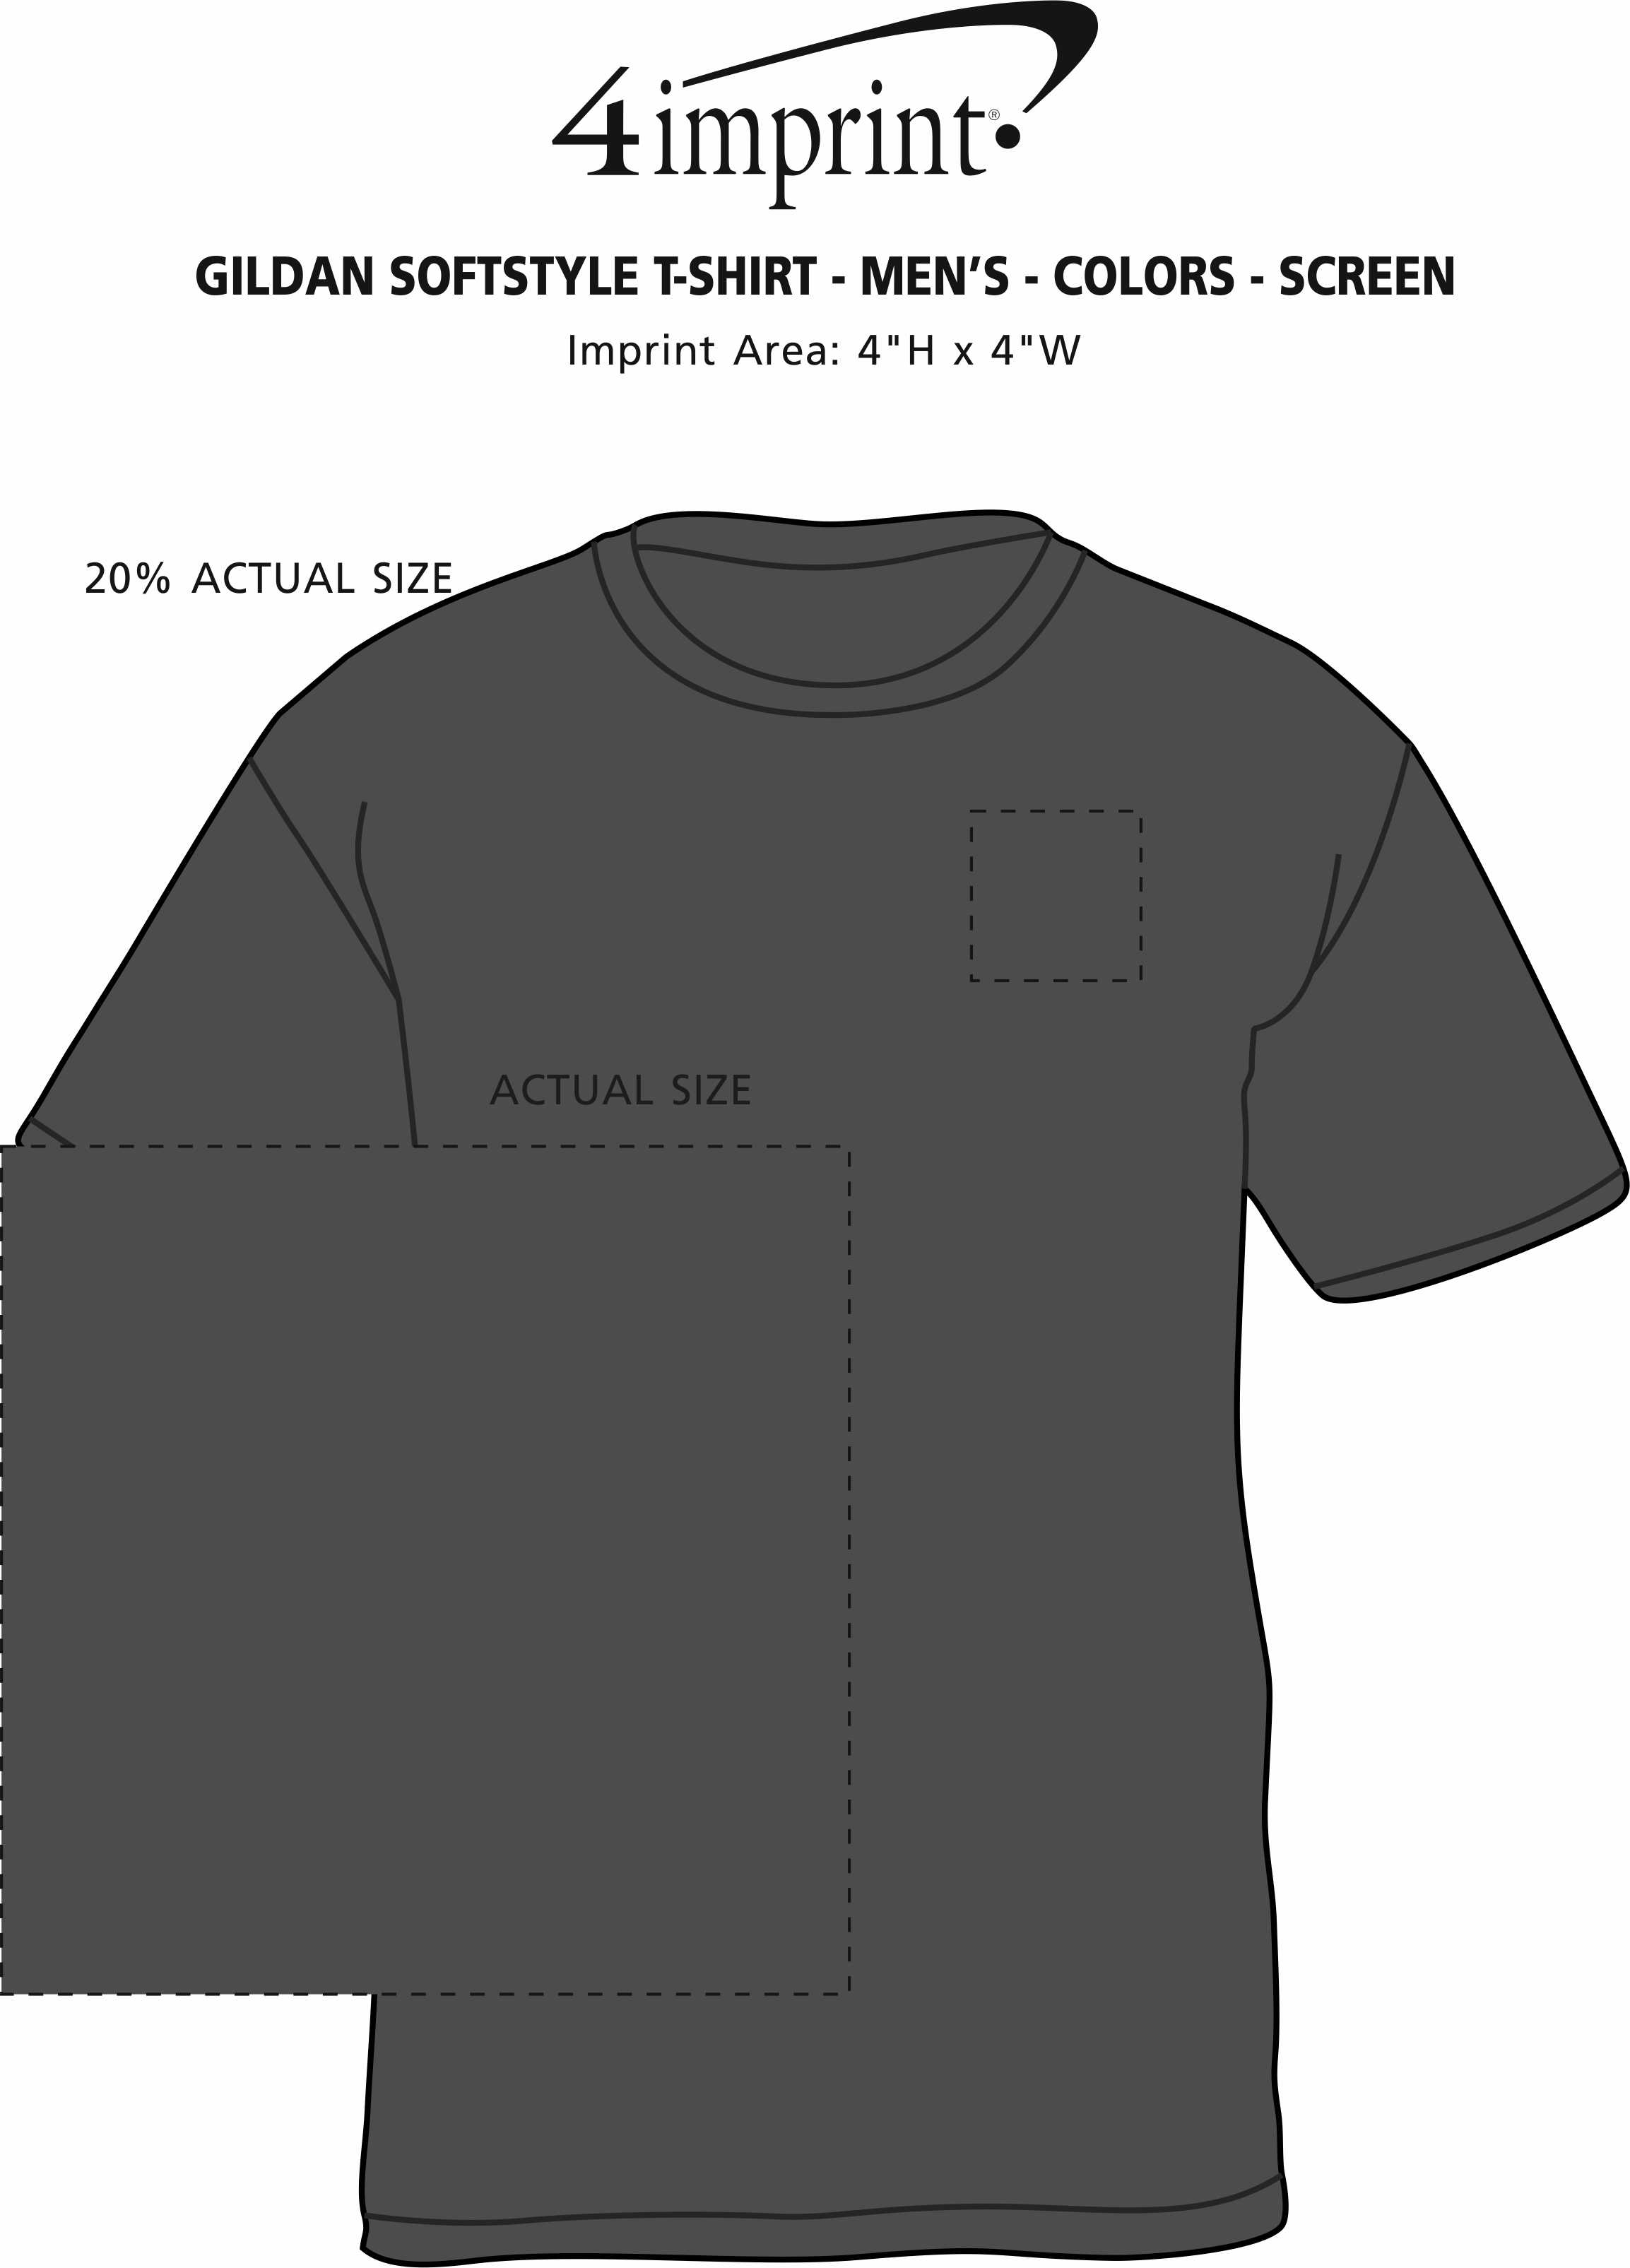 Imprint Area of Gildan Softstyle T-Shirt - Men's - Colors - Screen